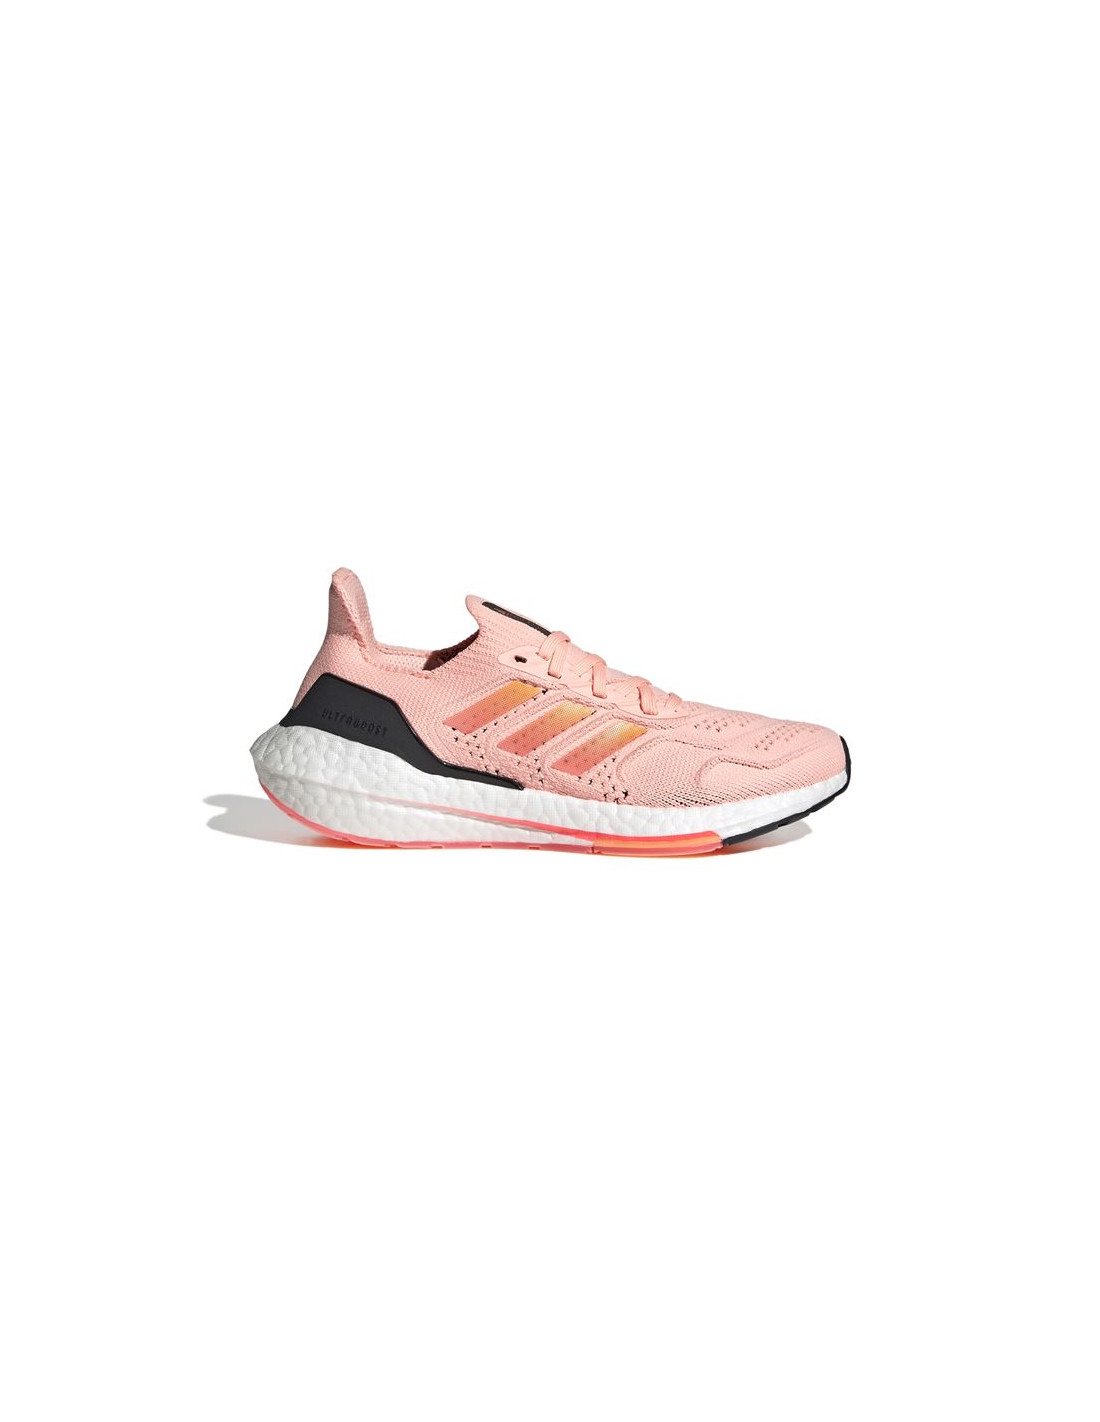 Zapatillas adidas ultraboost 22 w pink